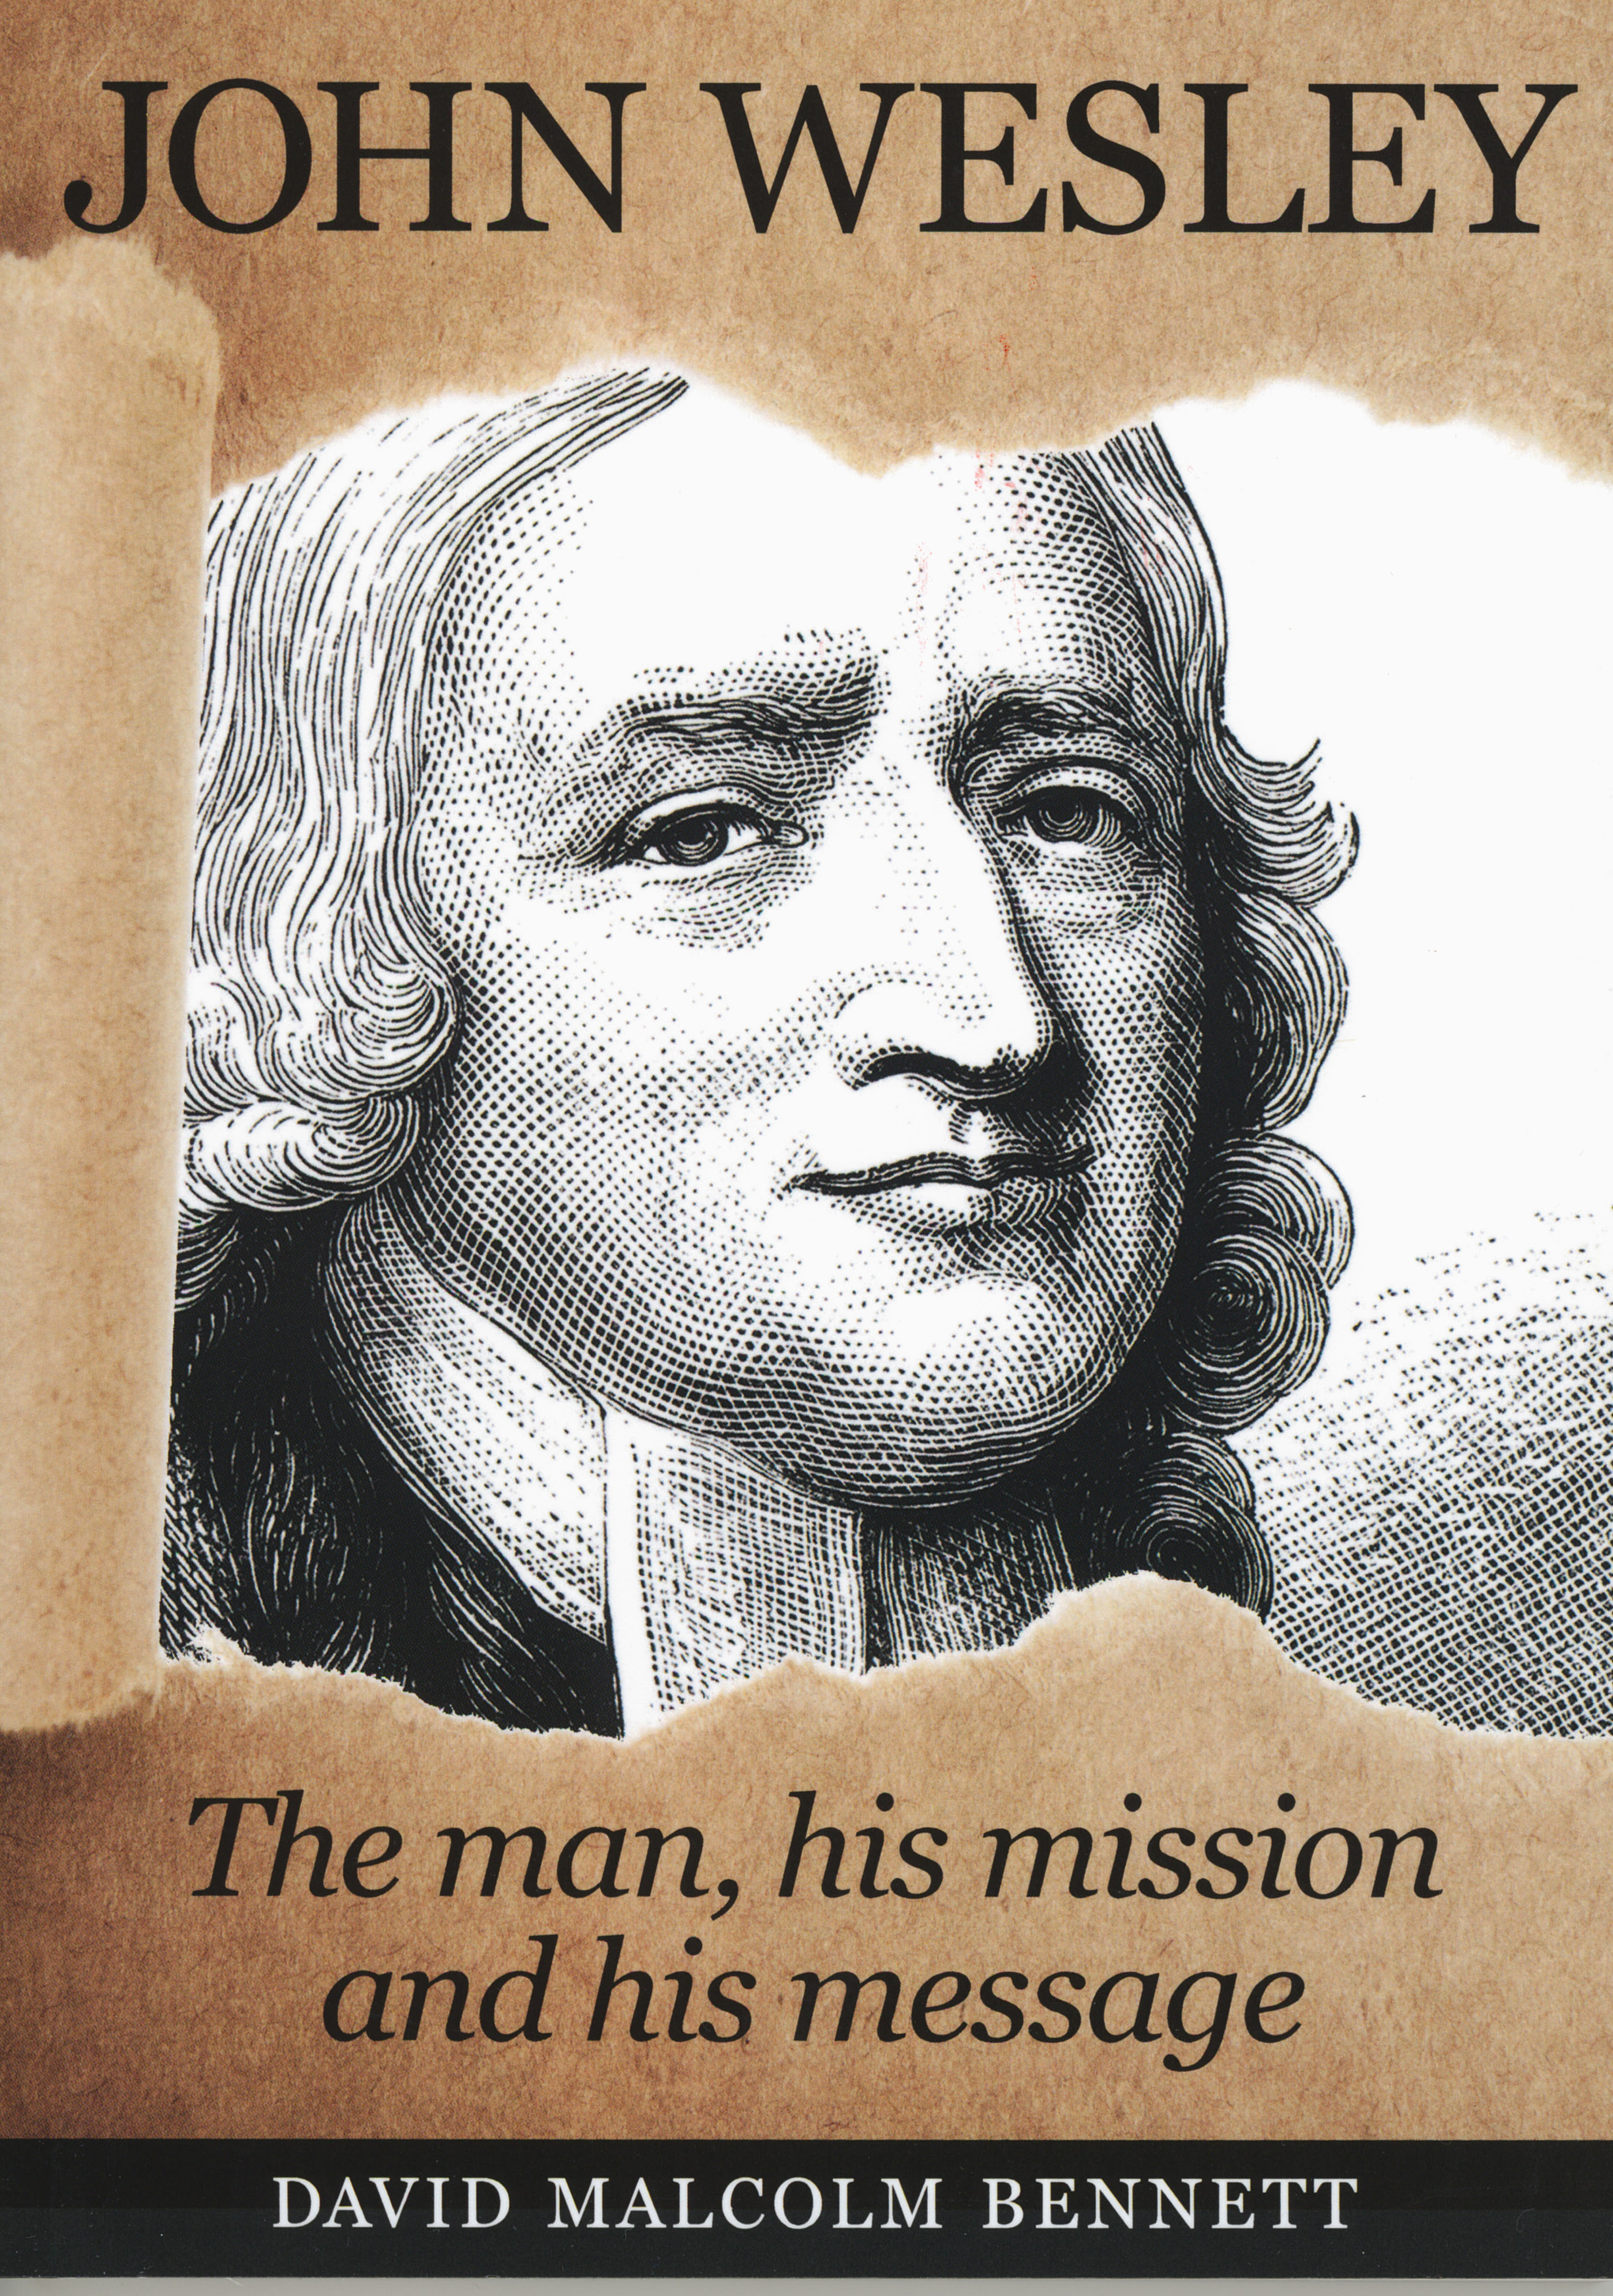 John Wesley by David Malcolm Bennett 108-9781925139273